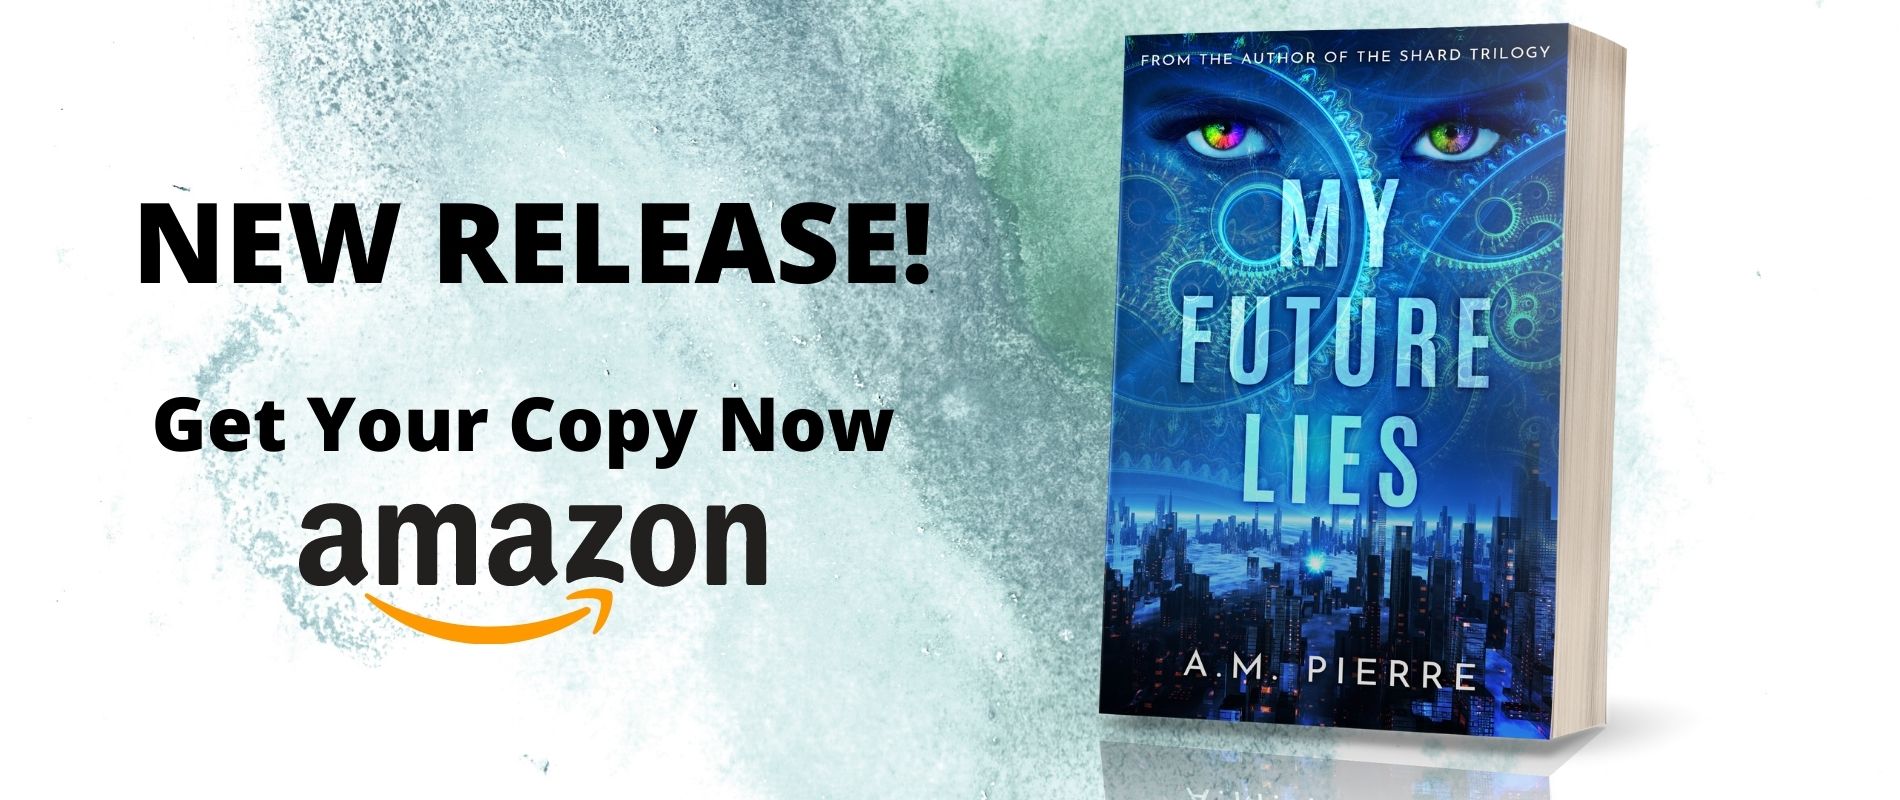 My Future Lies, a YA Sci Fi Time Travel Novel by A.M. Pierre
